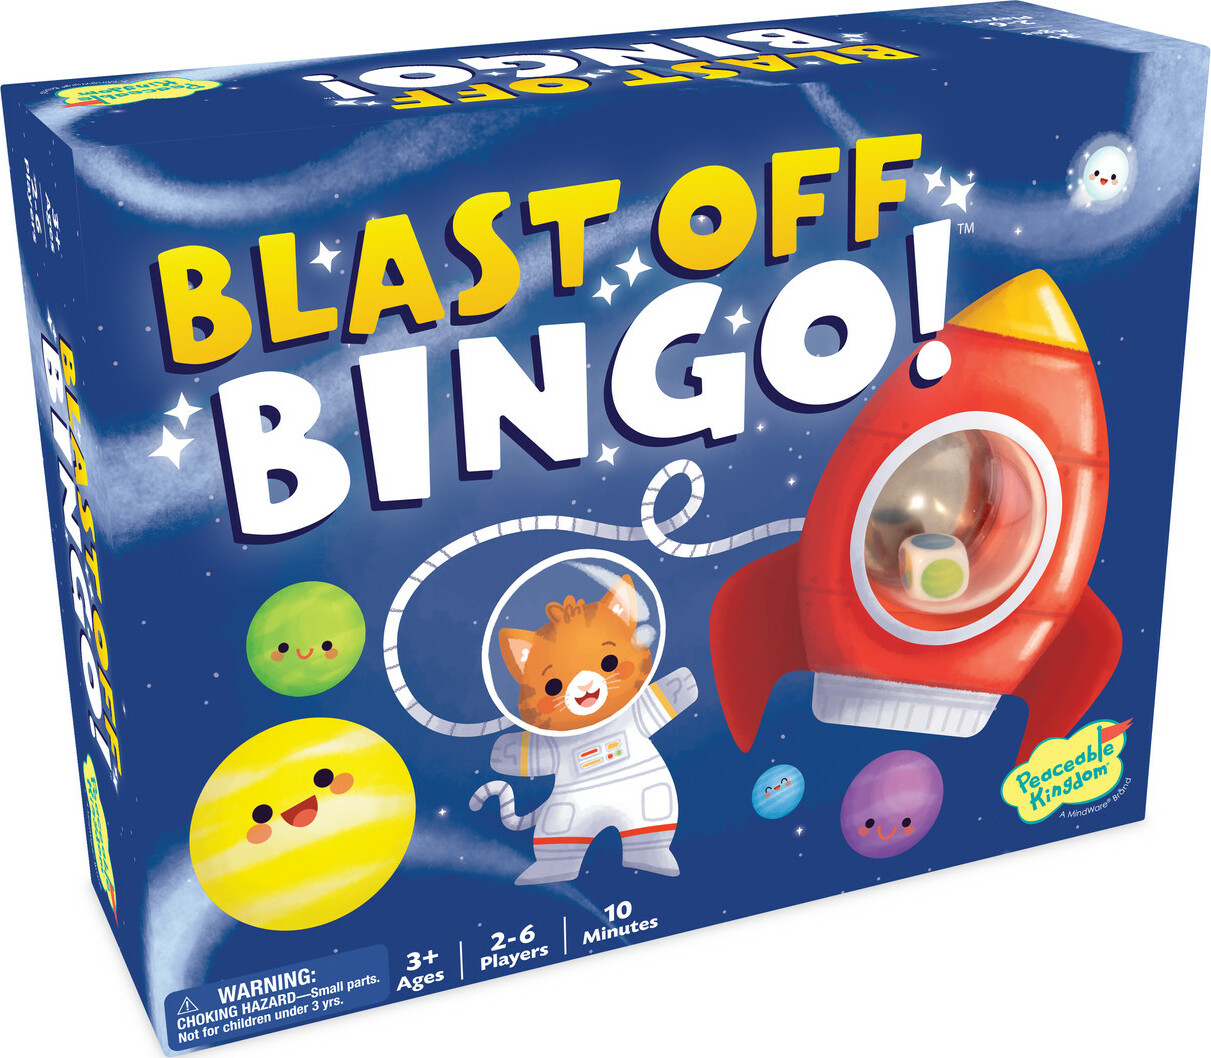 Blast-Off, Bingo!